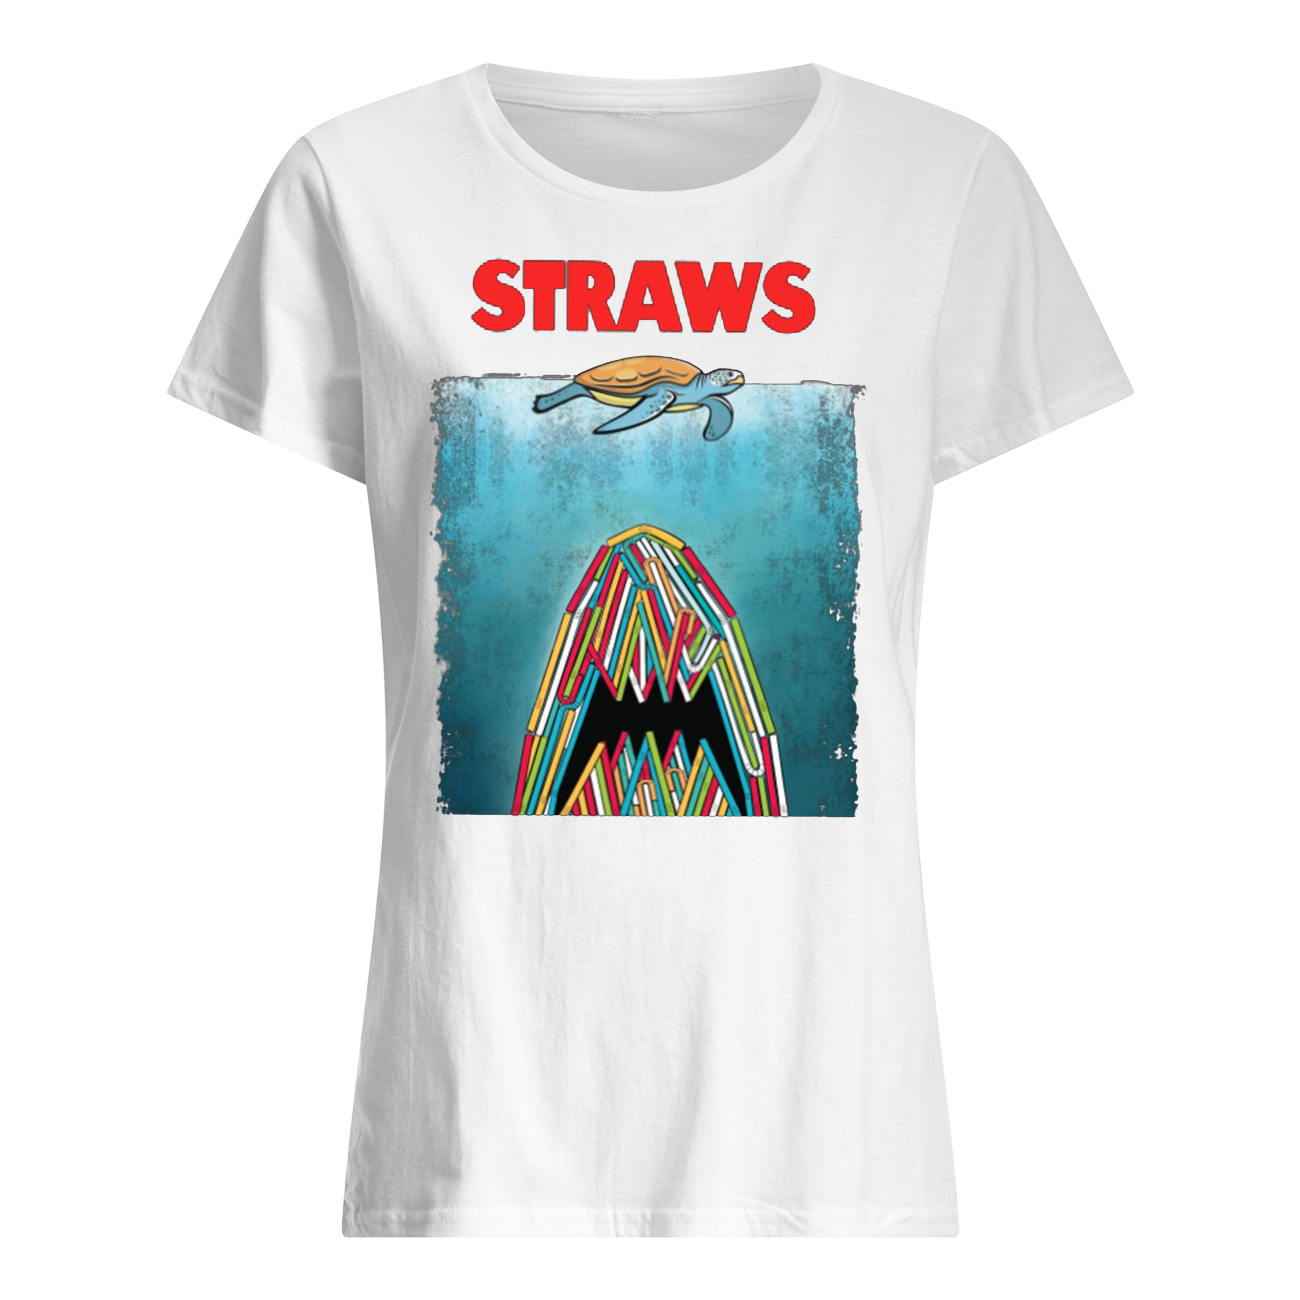 Shark plastic straws save the turtle women's shirt